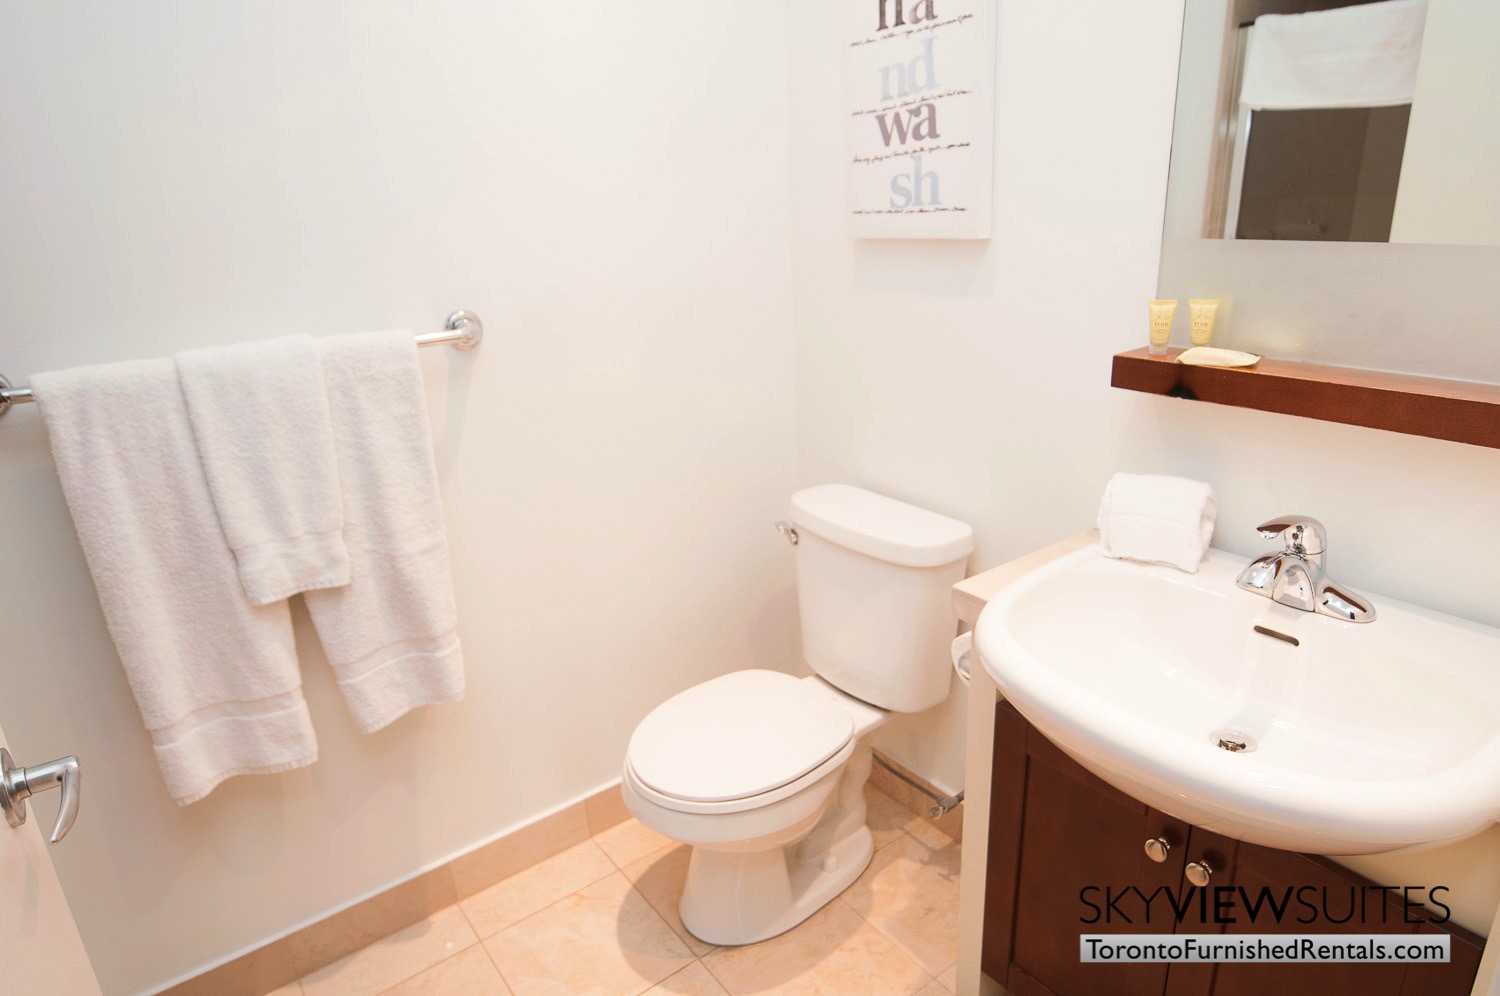 furnished rentals toronto waterfront bathroom